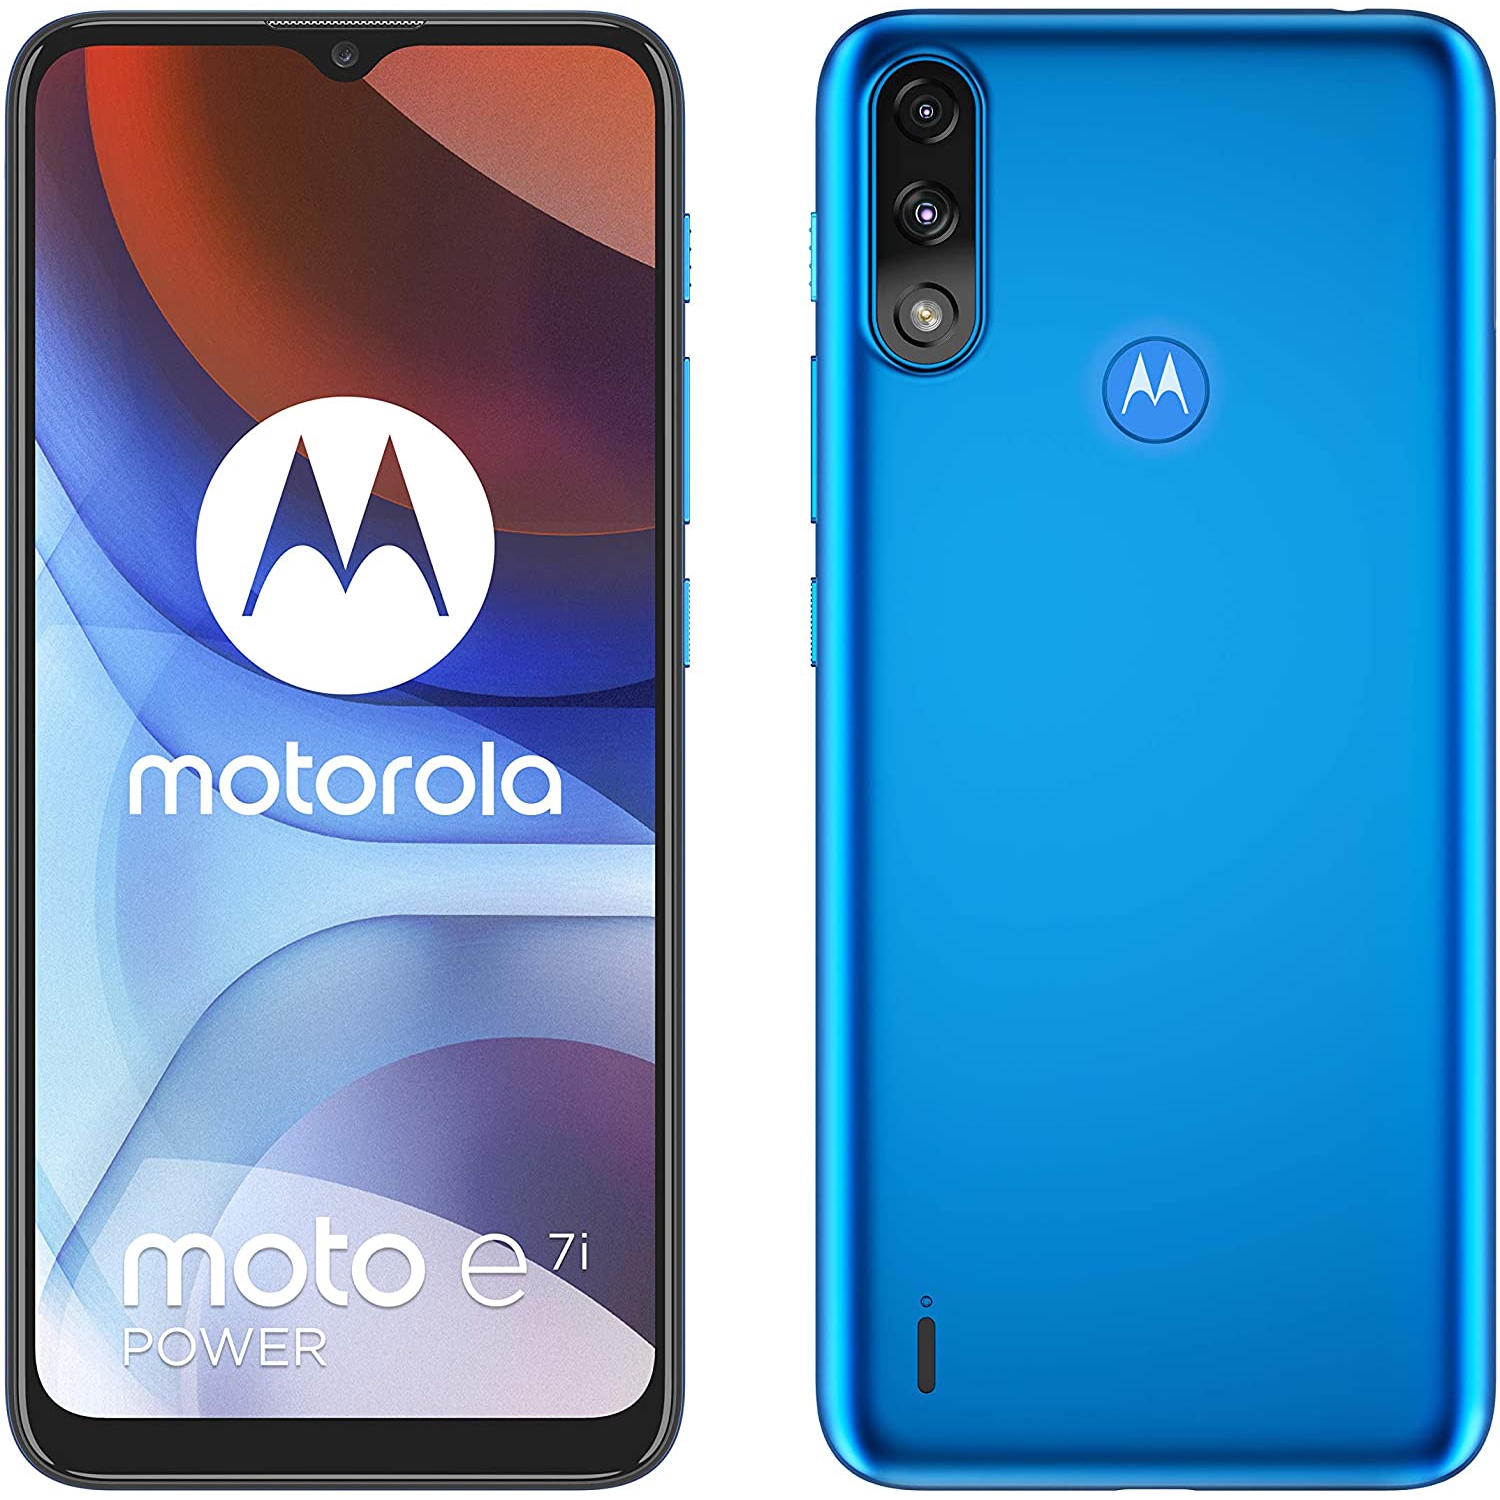 Motorola Moto E7i Power 32GB/2GB (XT2097-13) - GSM Unlocked Smartphone - International Model - Tahiti Blue - Brand New